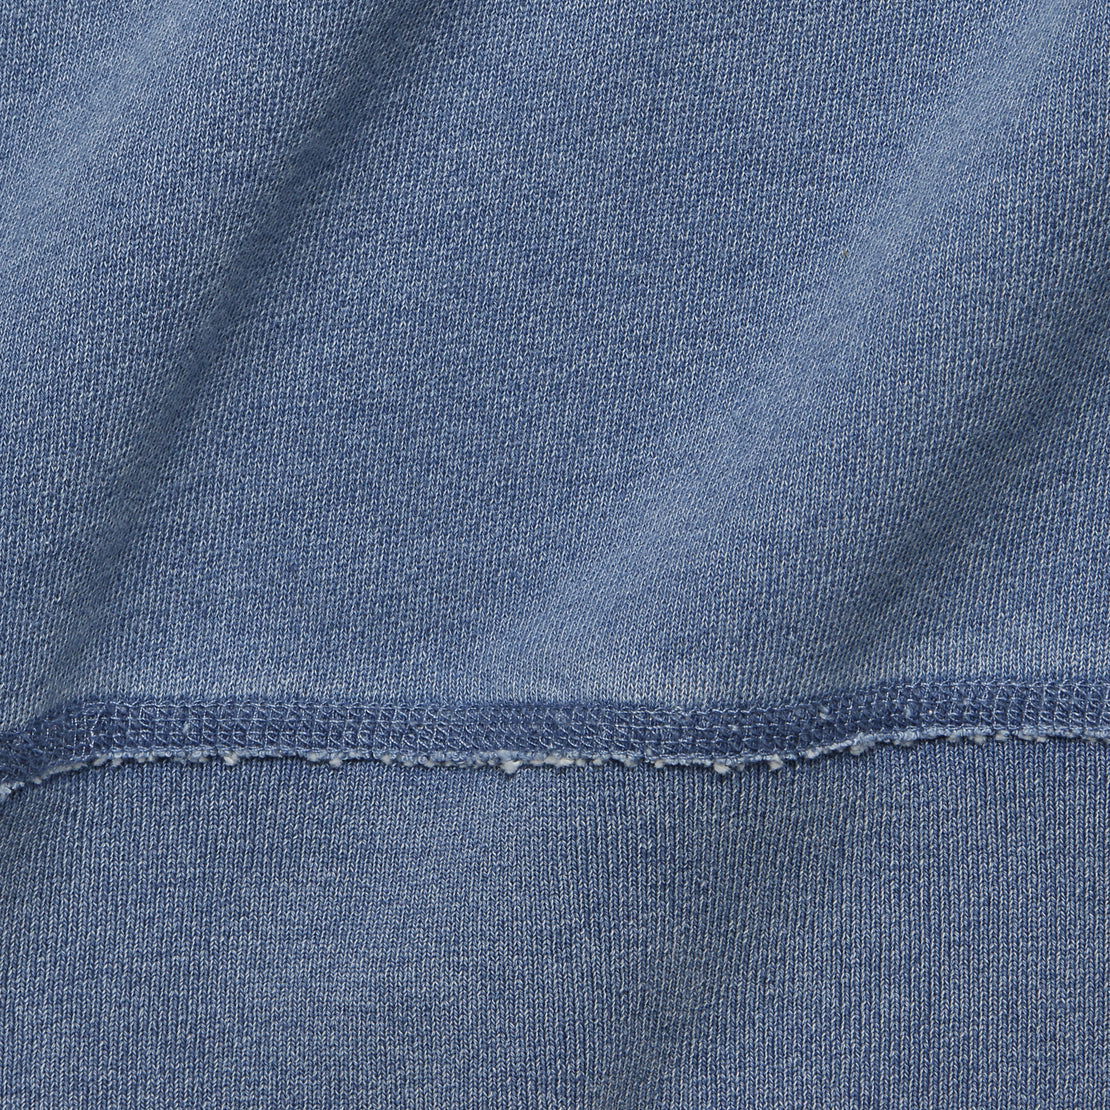 French Terry Sweatshirt - Light Indigo - Alex Mill - STAG Provisions - Tops - Fleece / Sweatshirt